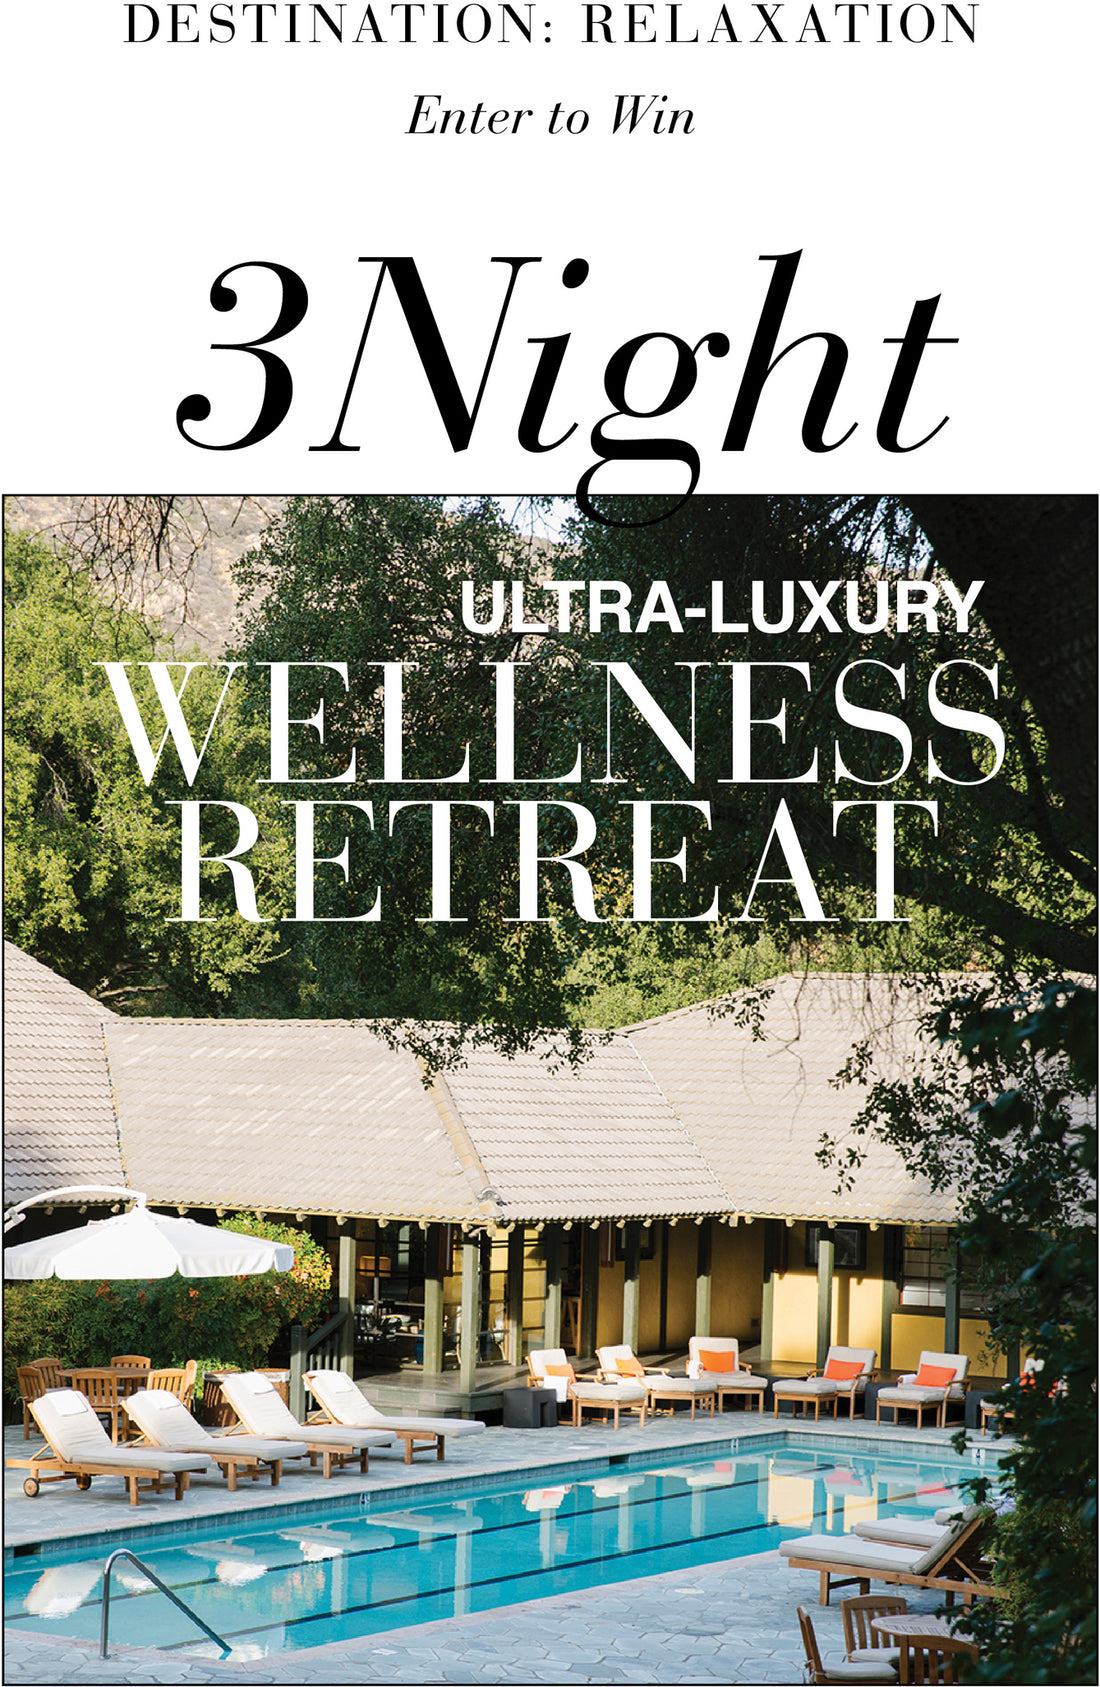 Enter to Win 3 Night Ultra-Luxury Wellness Retreat